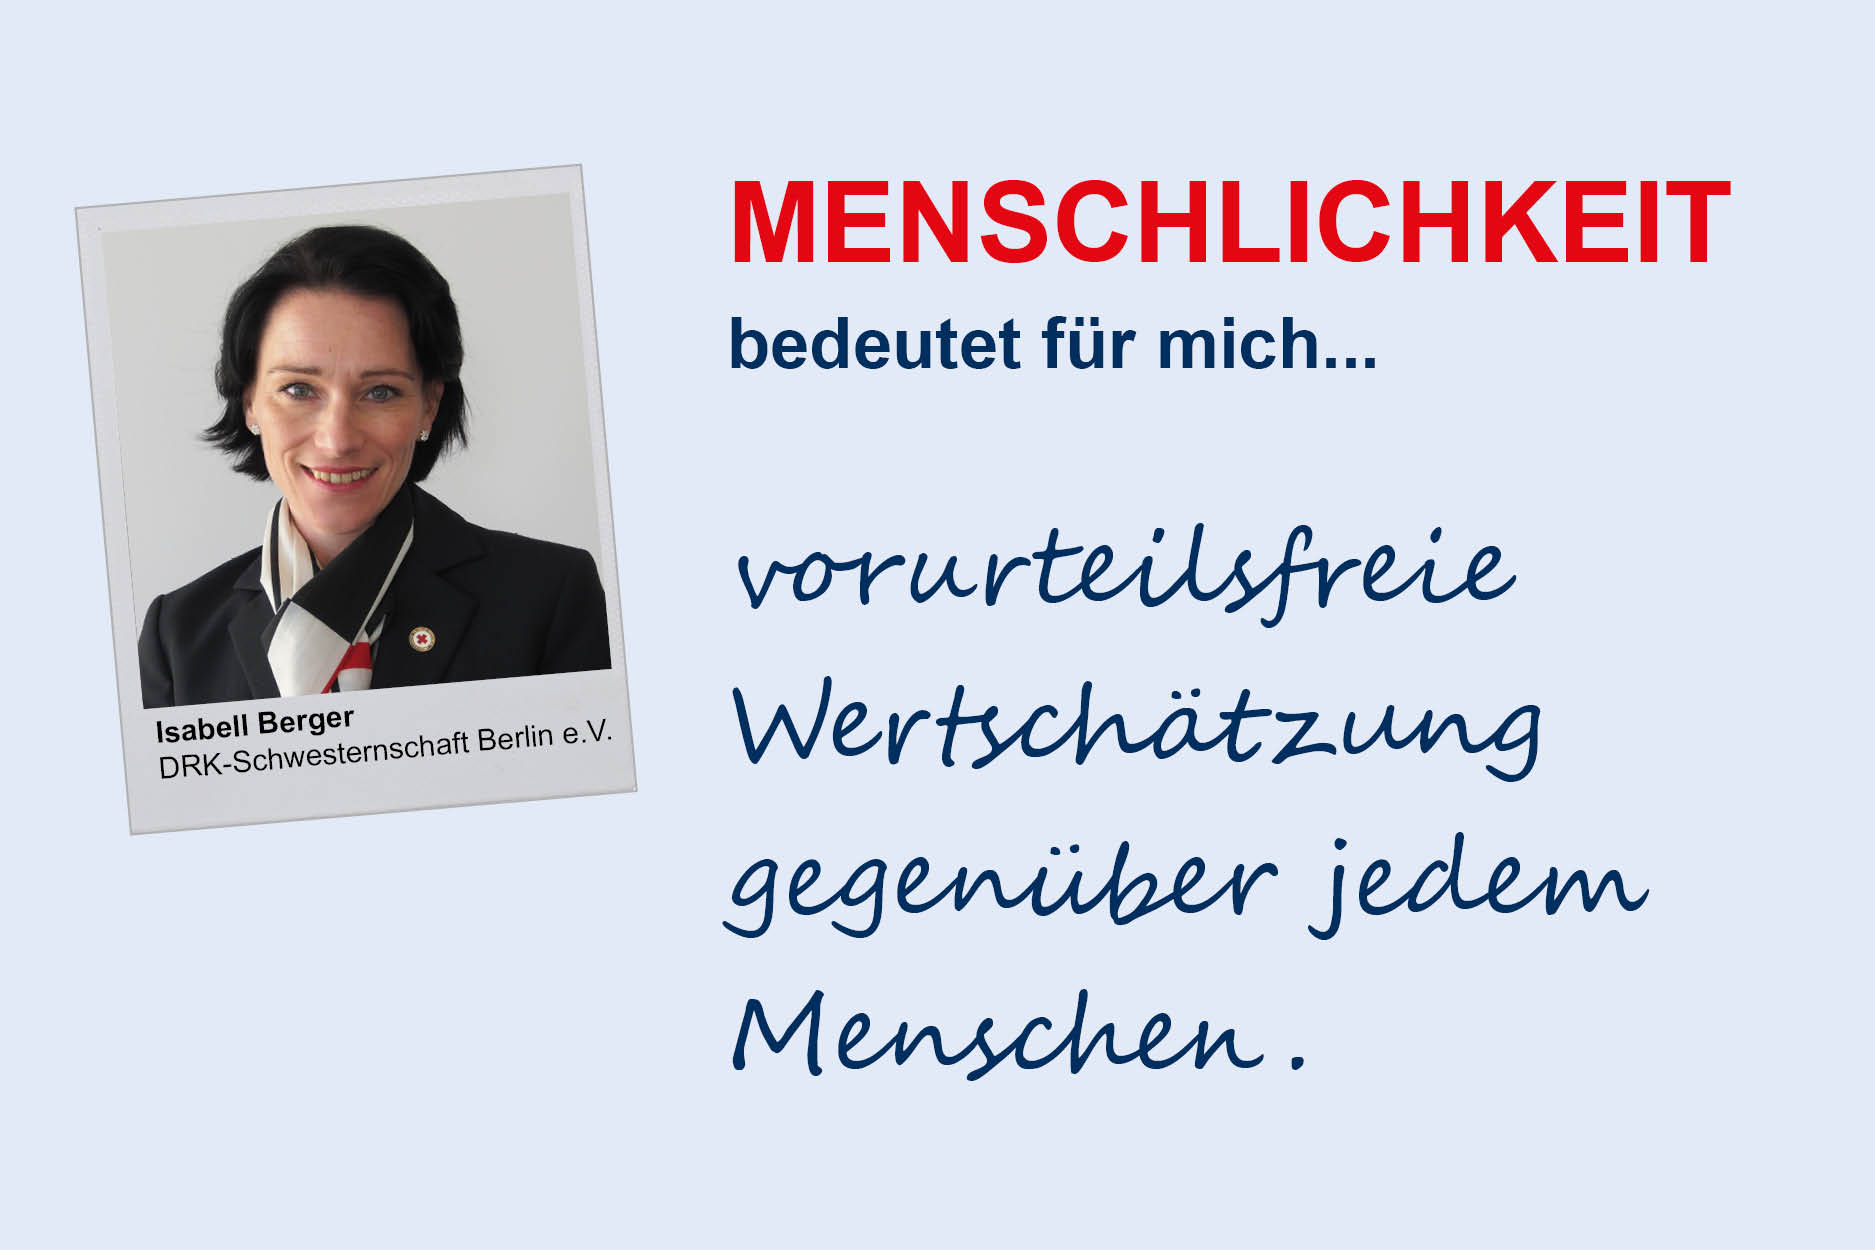 Isabell Berger, DRK-Schwesternschaft Berlin e.V.
**Menschlichkeit**